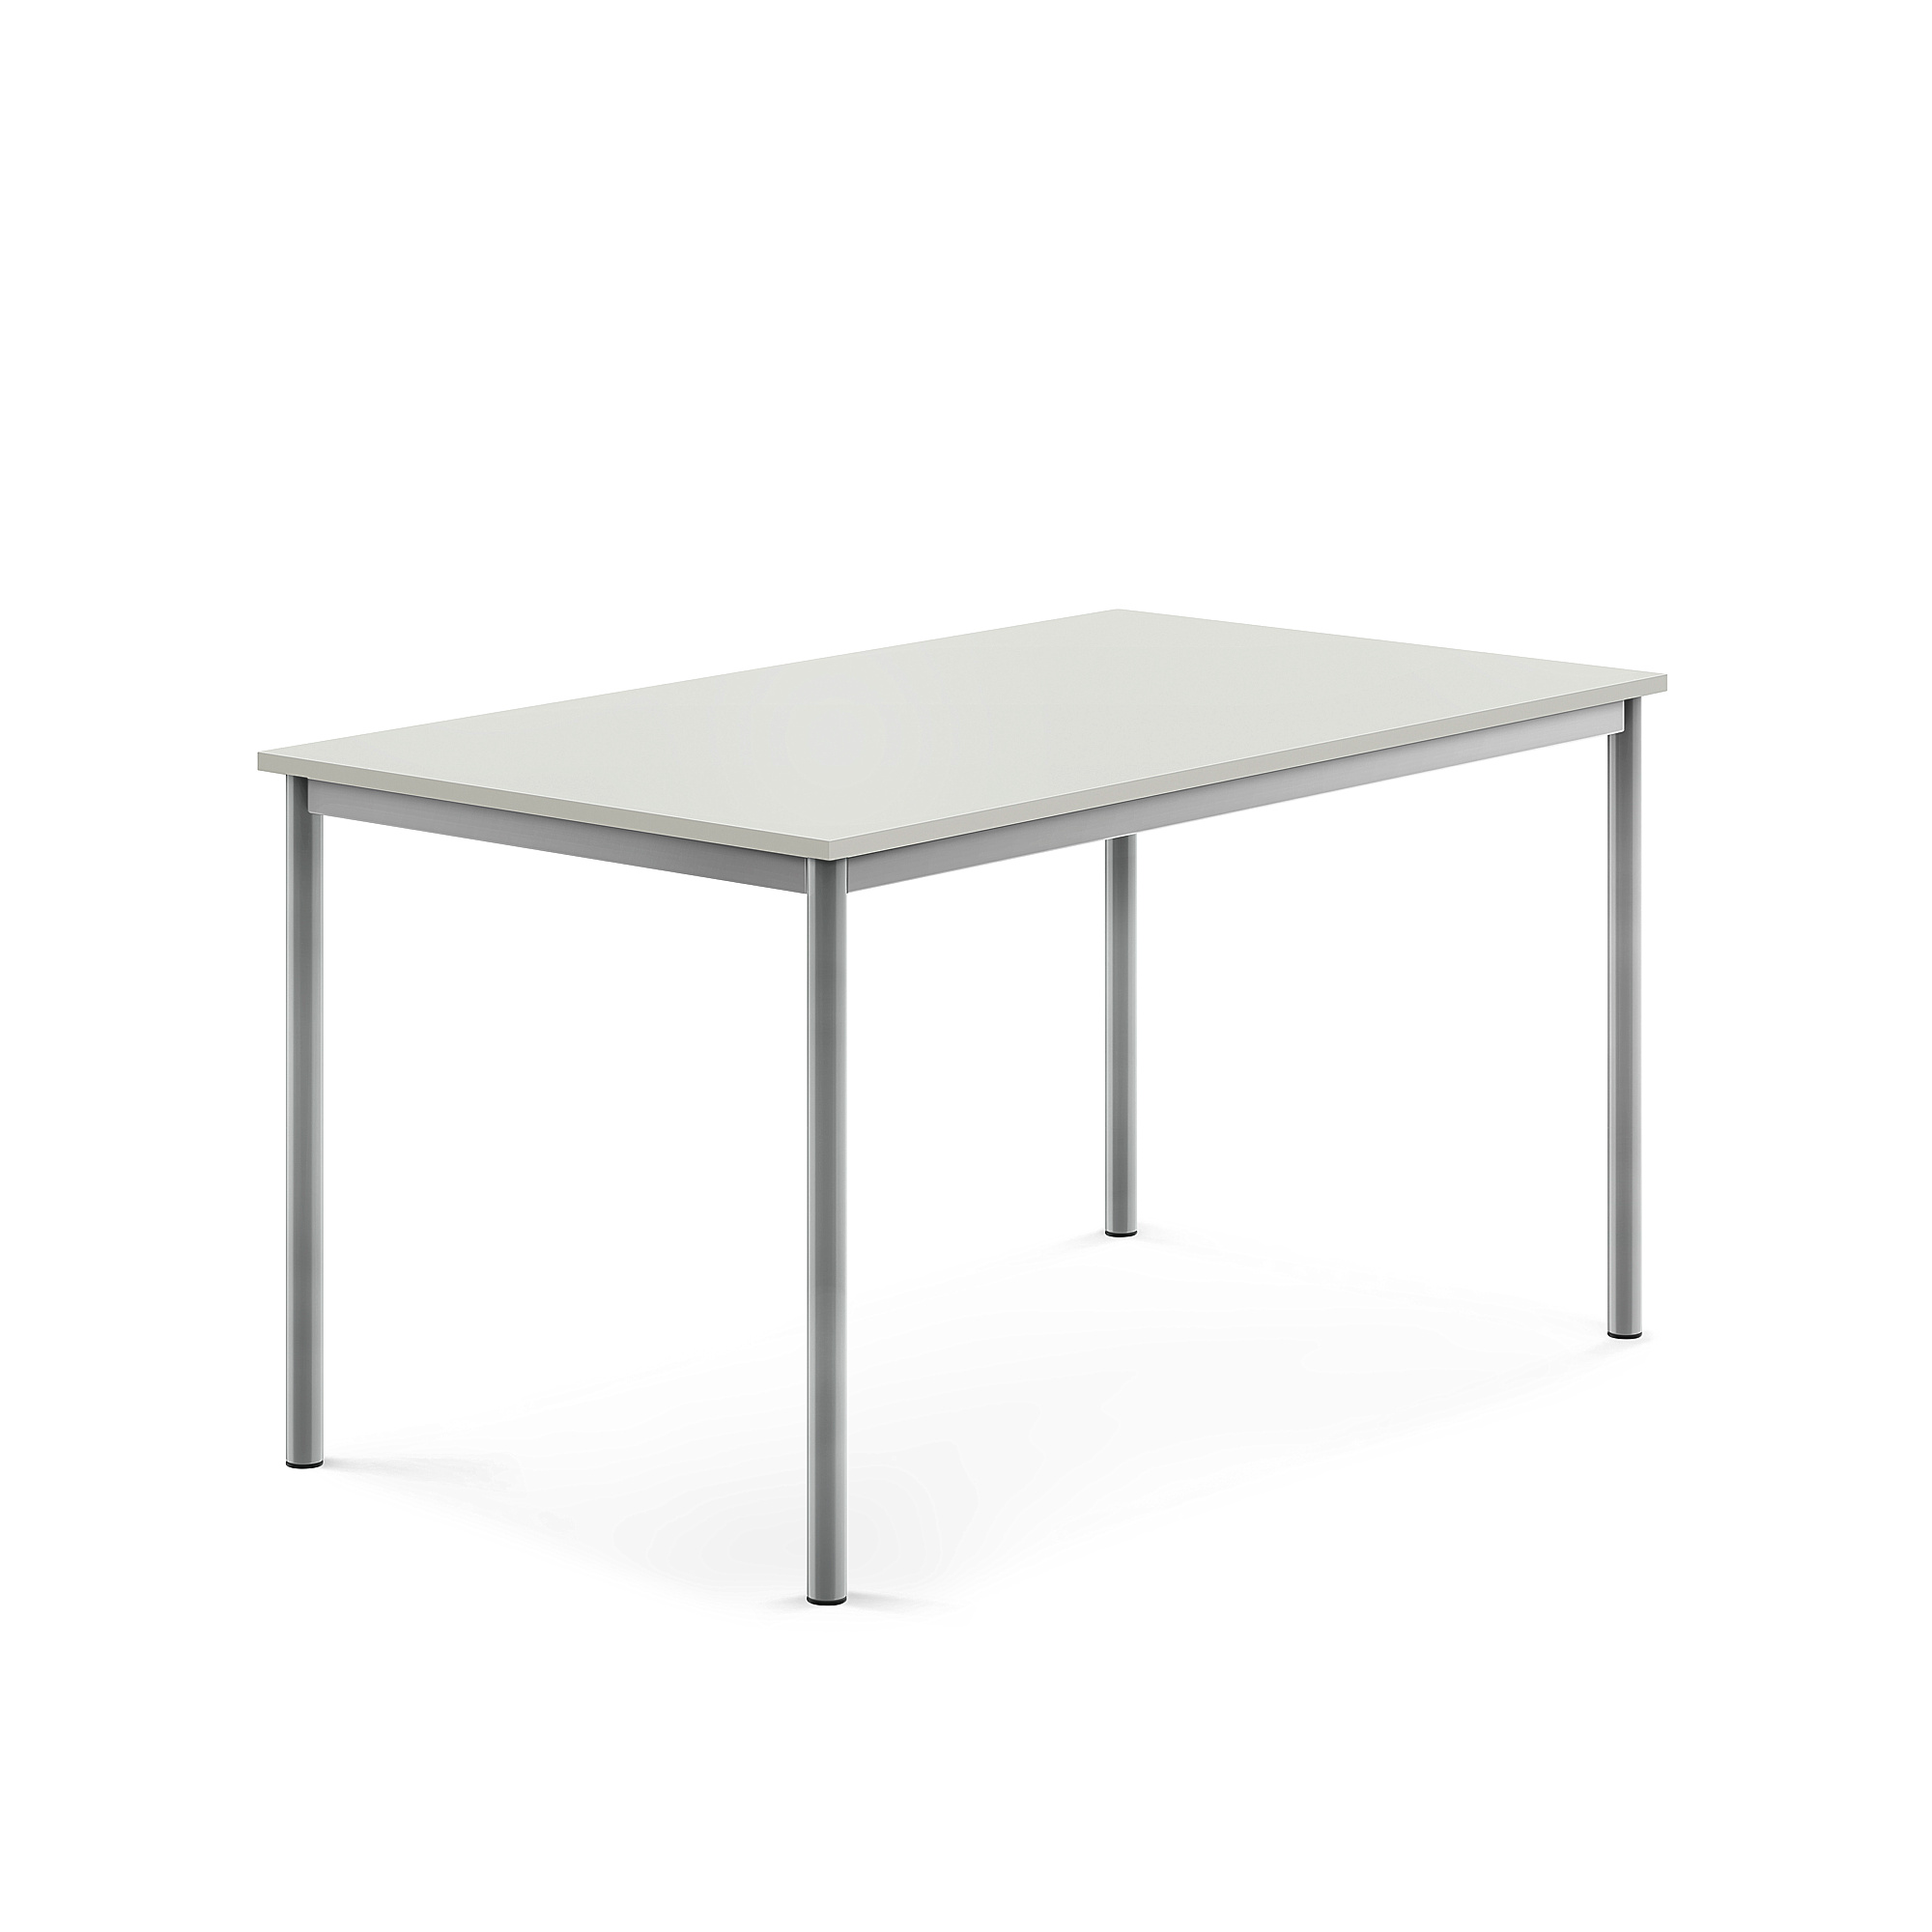 Stůl SONITUS, 1400x800x720 mm, stříbrné nohy, HPL deska tlumící hluk, šedá